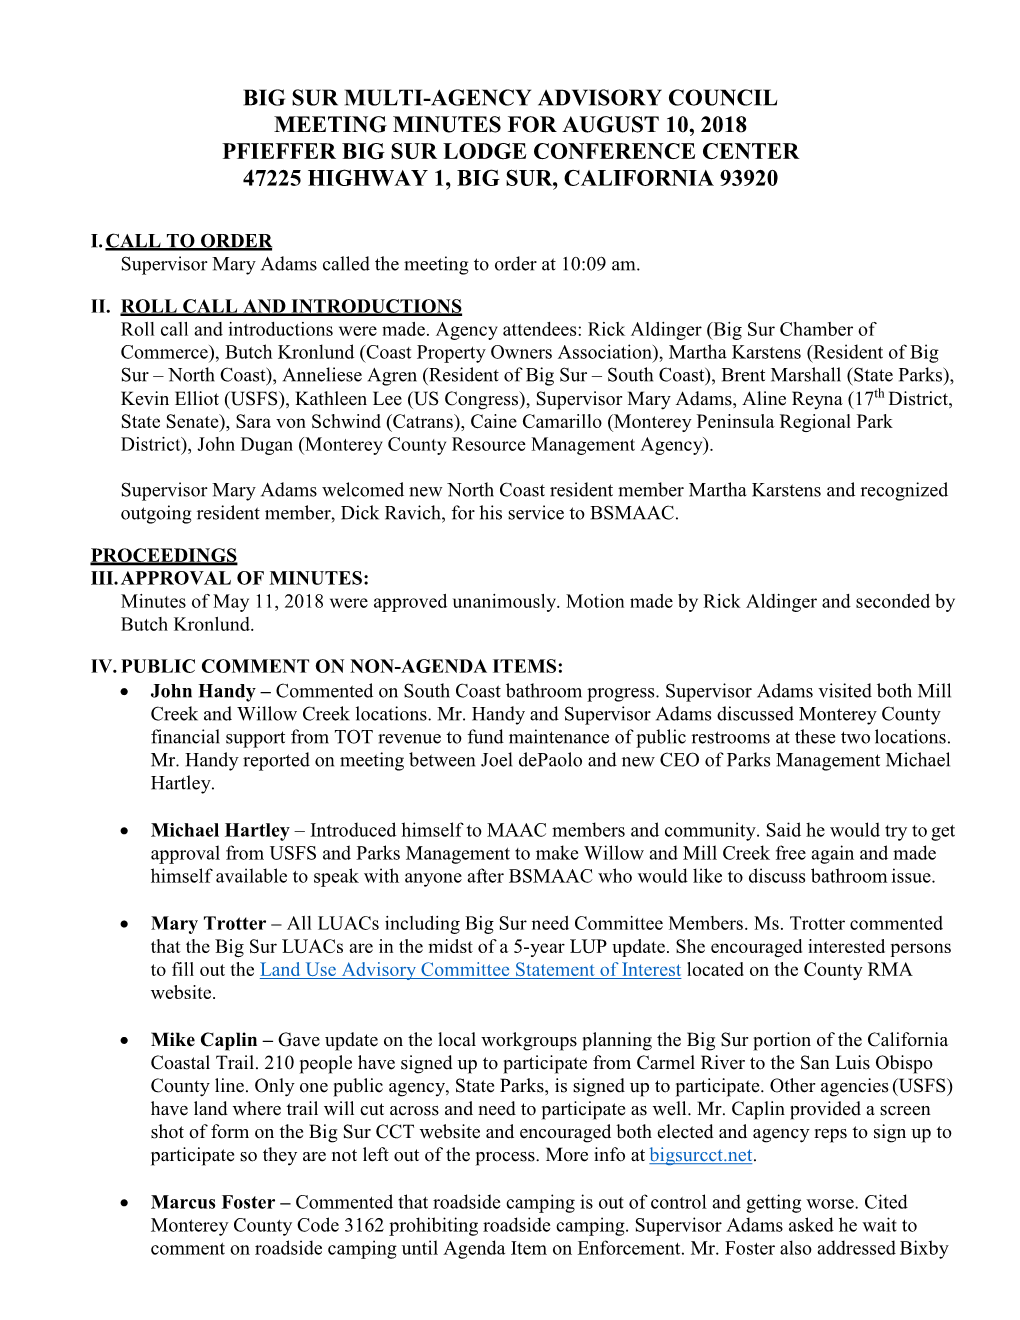 Big Sur Multi-Agency Meeting Minutes